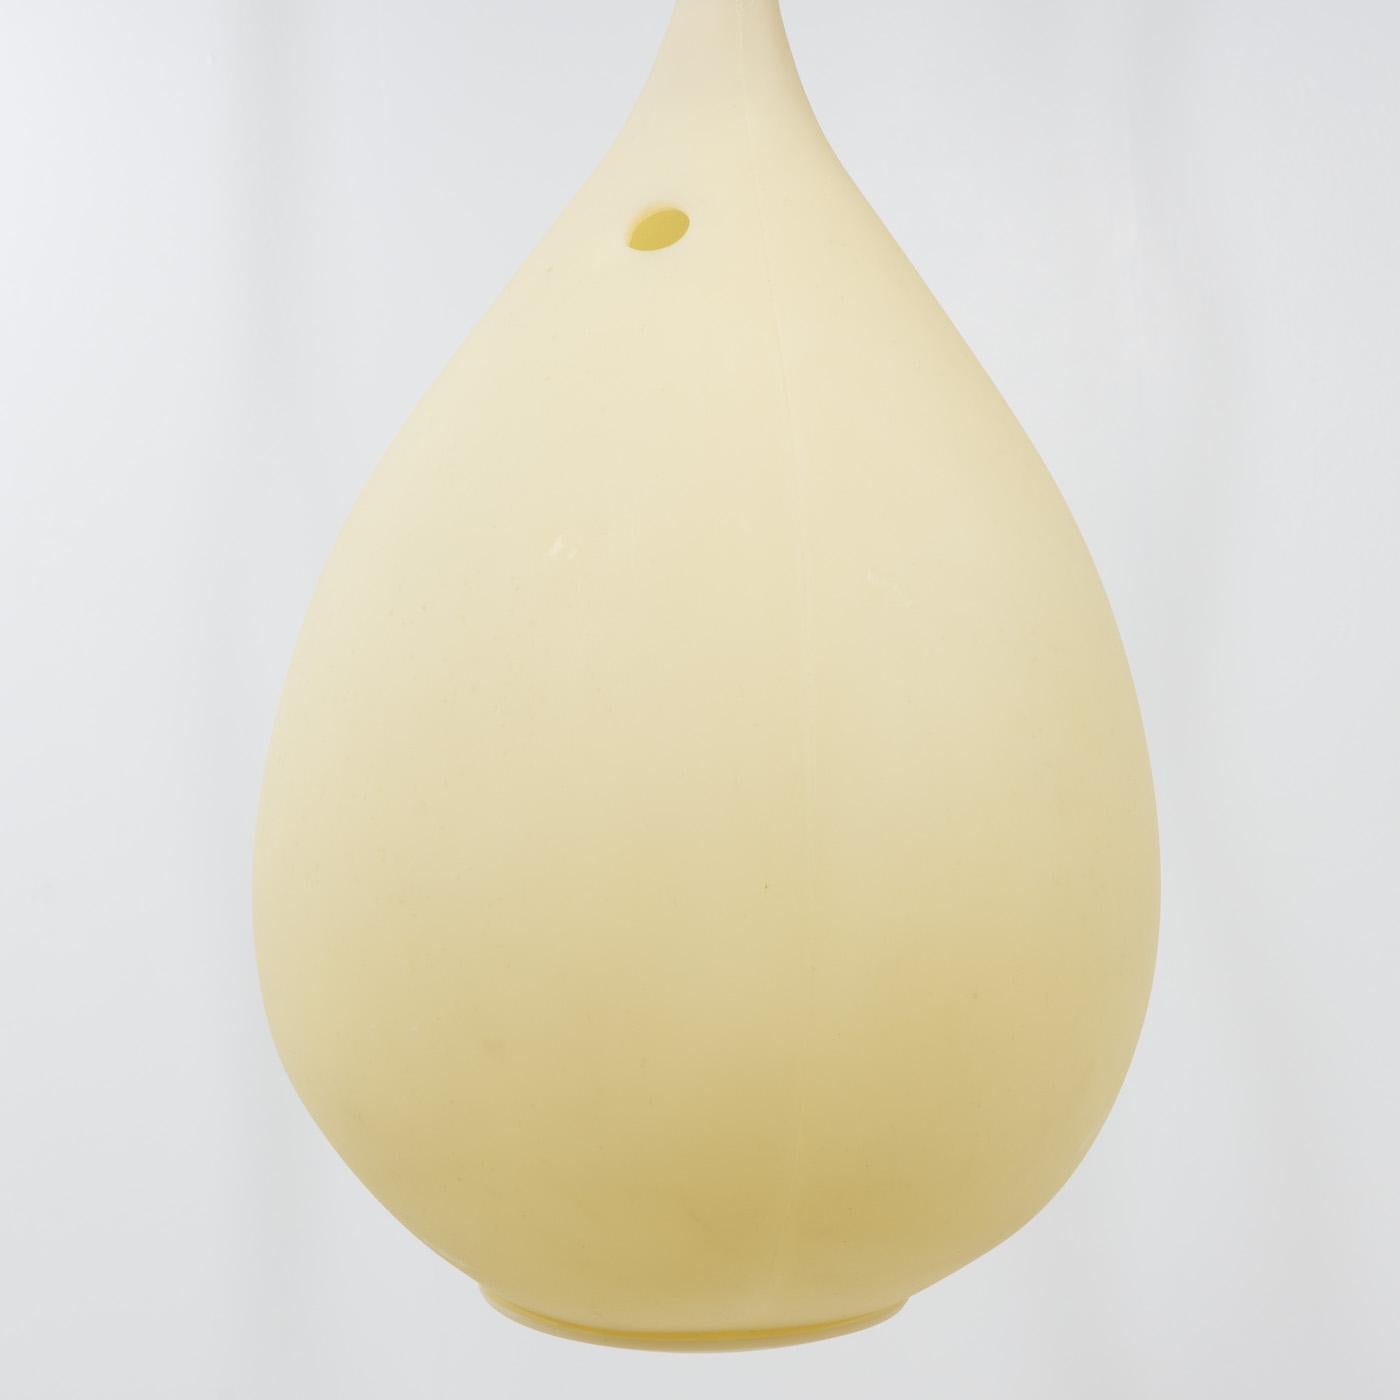 Rare Swiss Design Jingzi Ceiling Lamps, Herzog & De Meuron, for Belux, 2000s For Sale 2